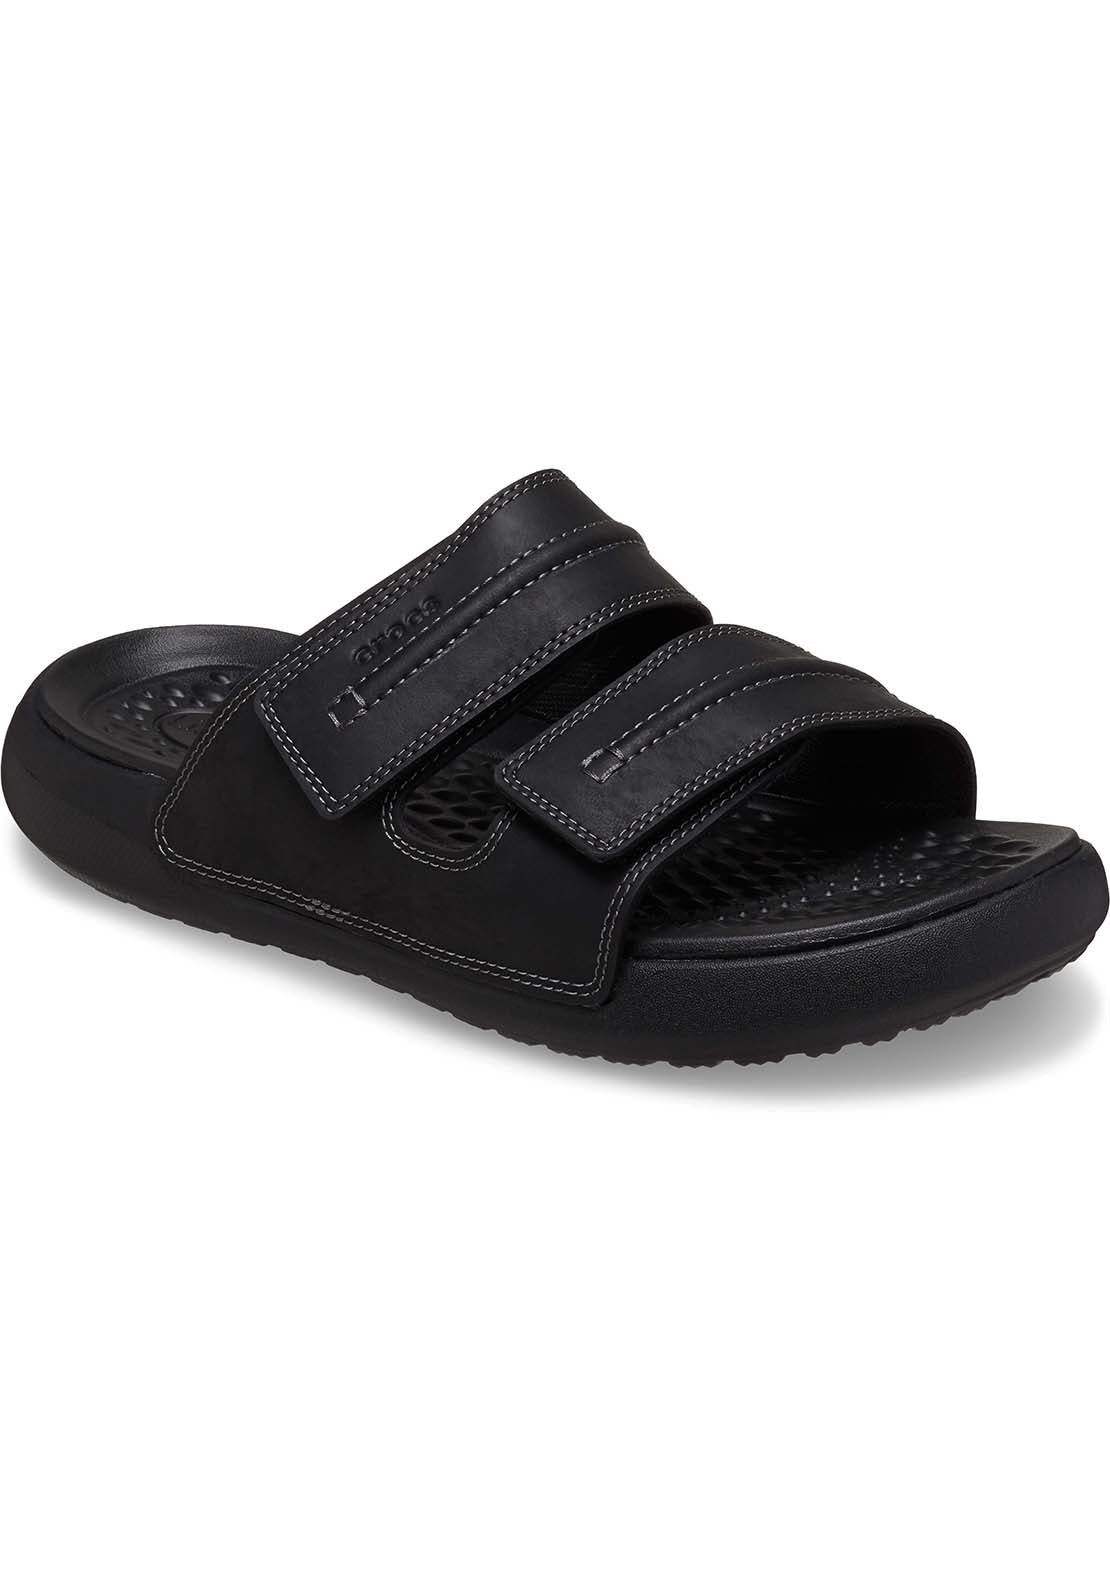 Crocs Yukon Vista II Sandal - Black 1 Shaws Department Stores